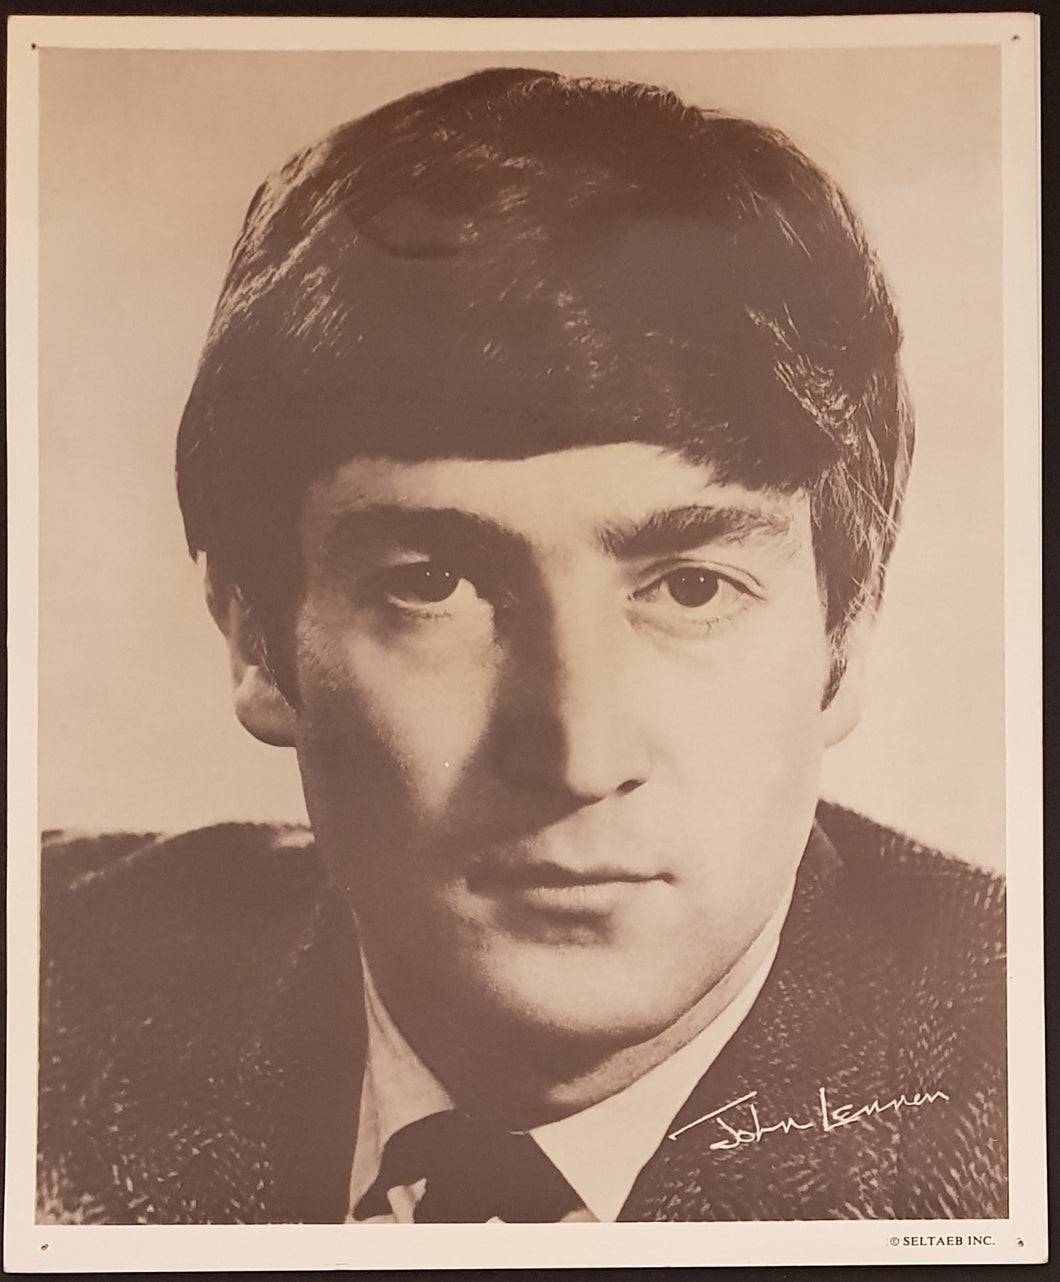 Beatles - John Lennon Seltaeb Picture Card